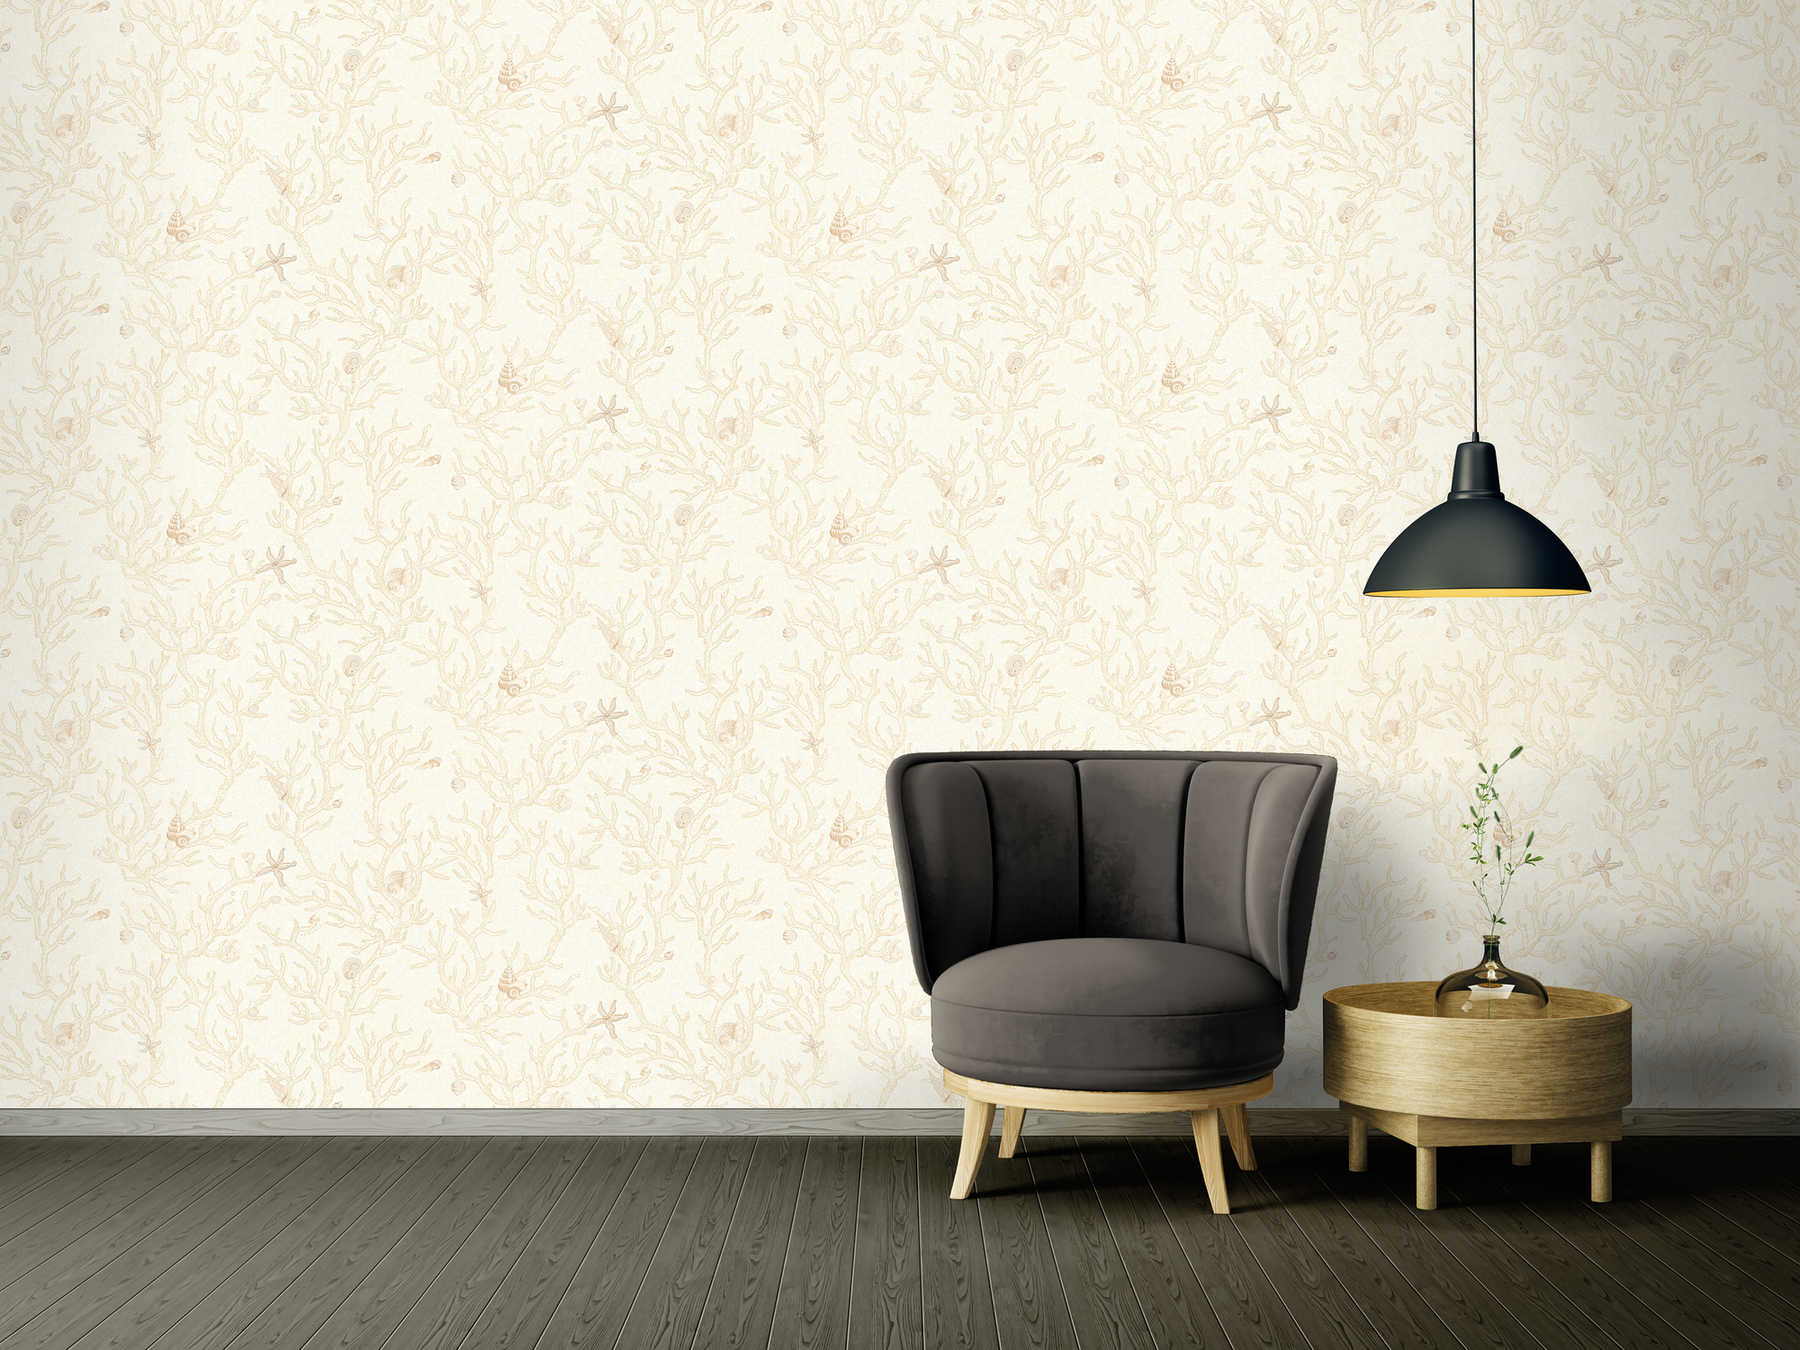             Wallpaper VERSACE with coral pattern - cream, metallic
        